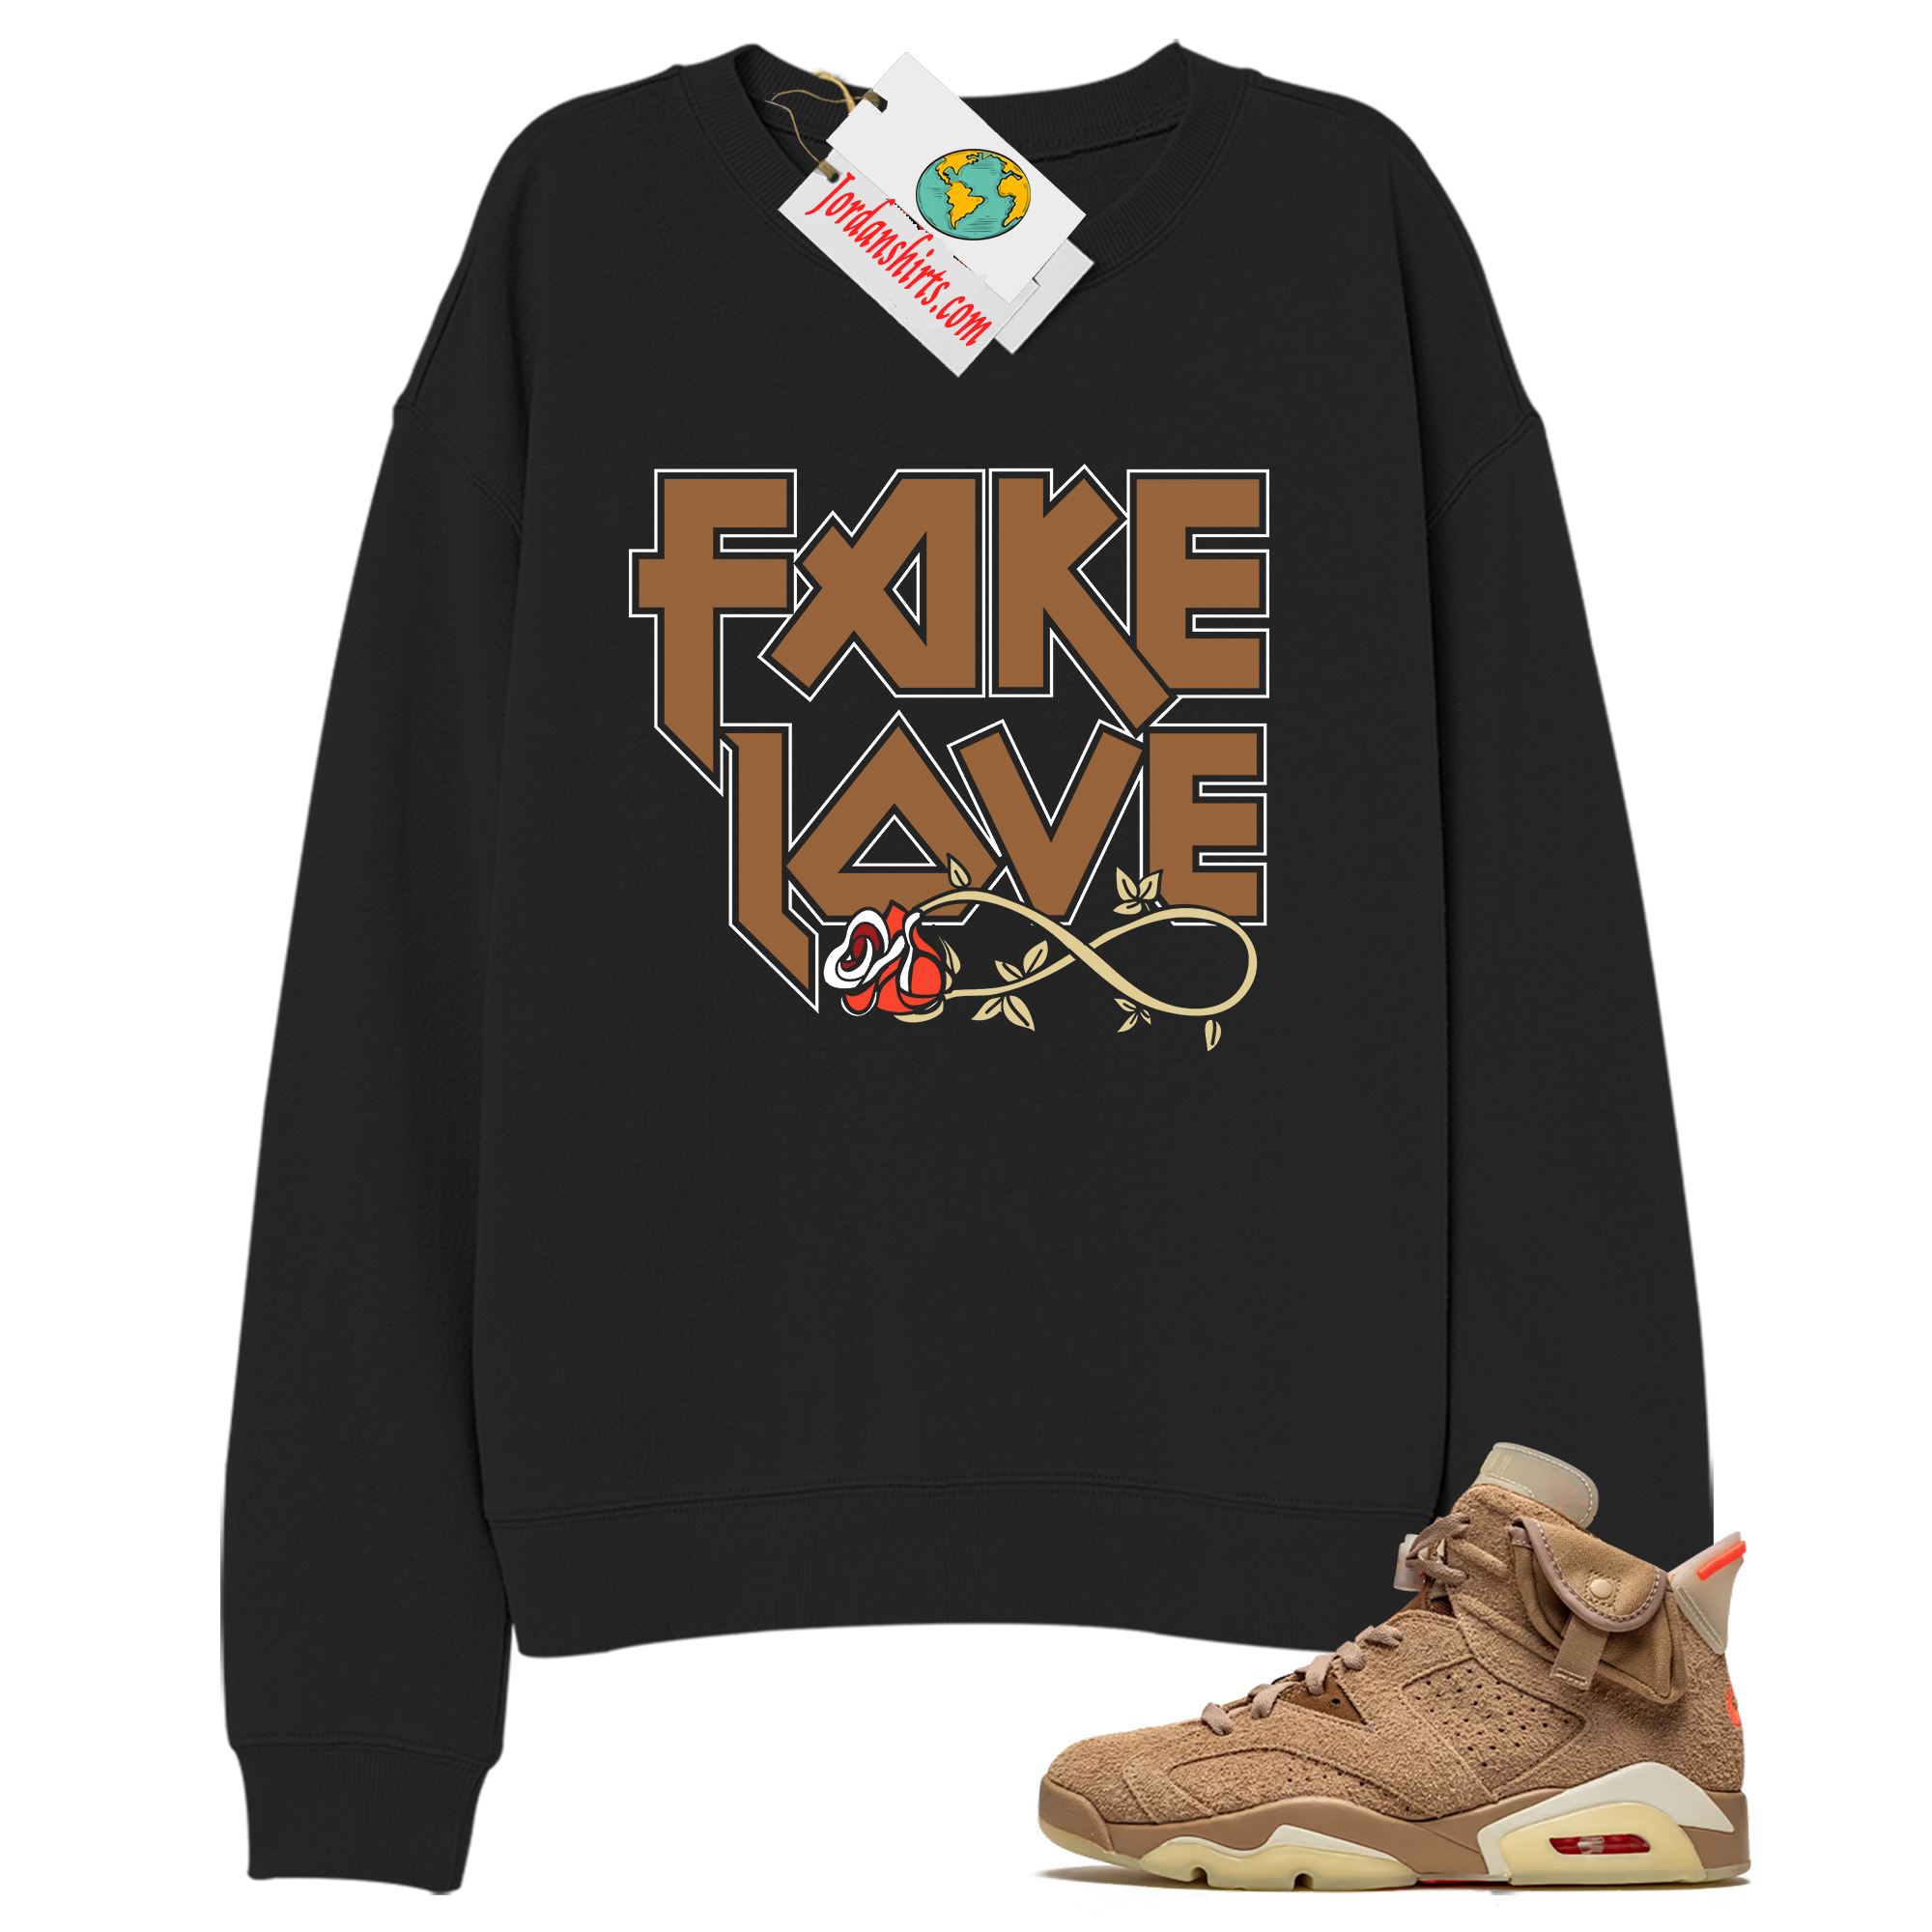 Jordan 6 Sweatshirt, Fake Love Infinity Rose Black Sweatshirt Air Jordan 6 Travis Scott 6s Size Up To 5xl